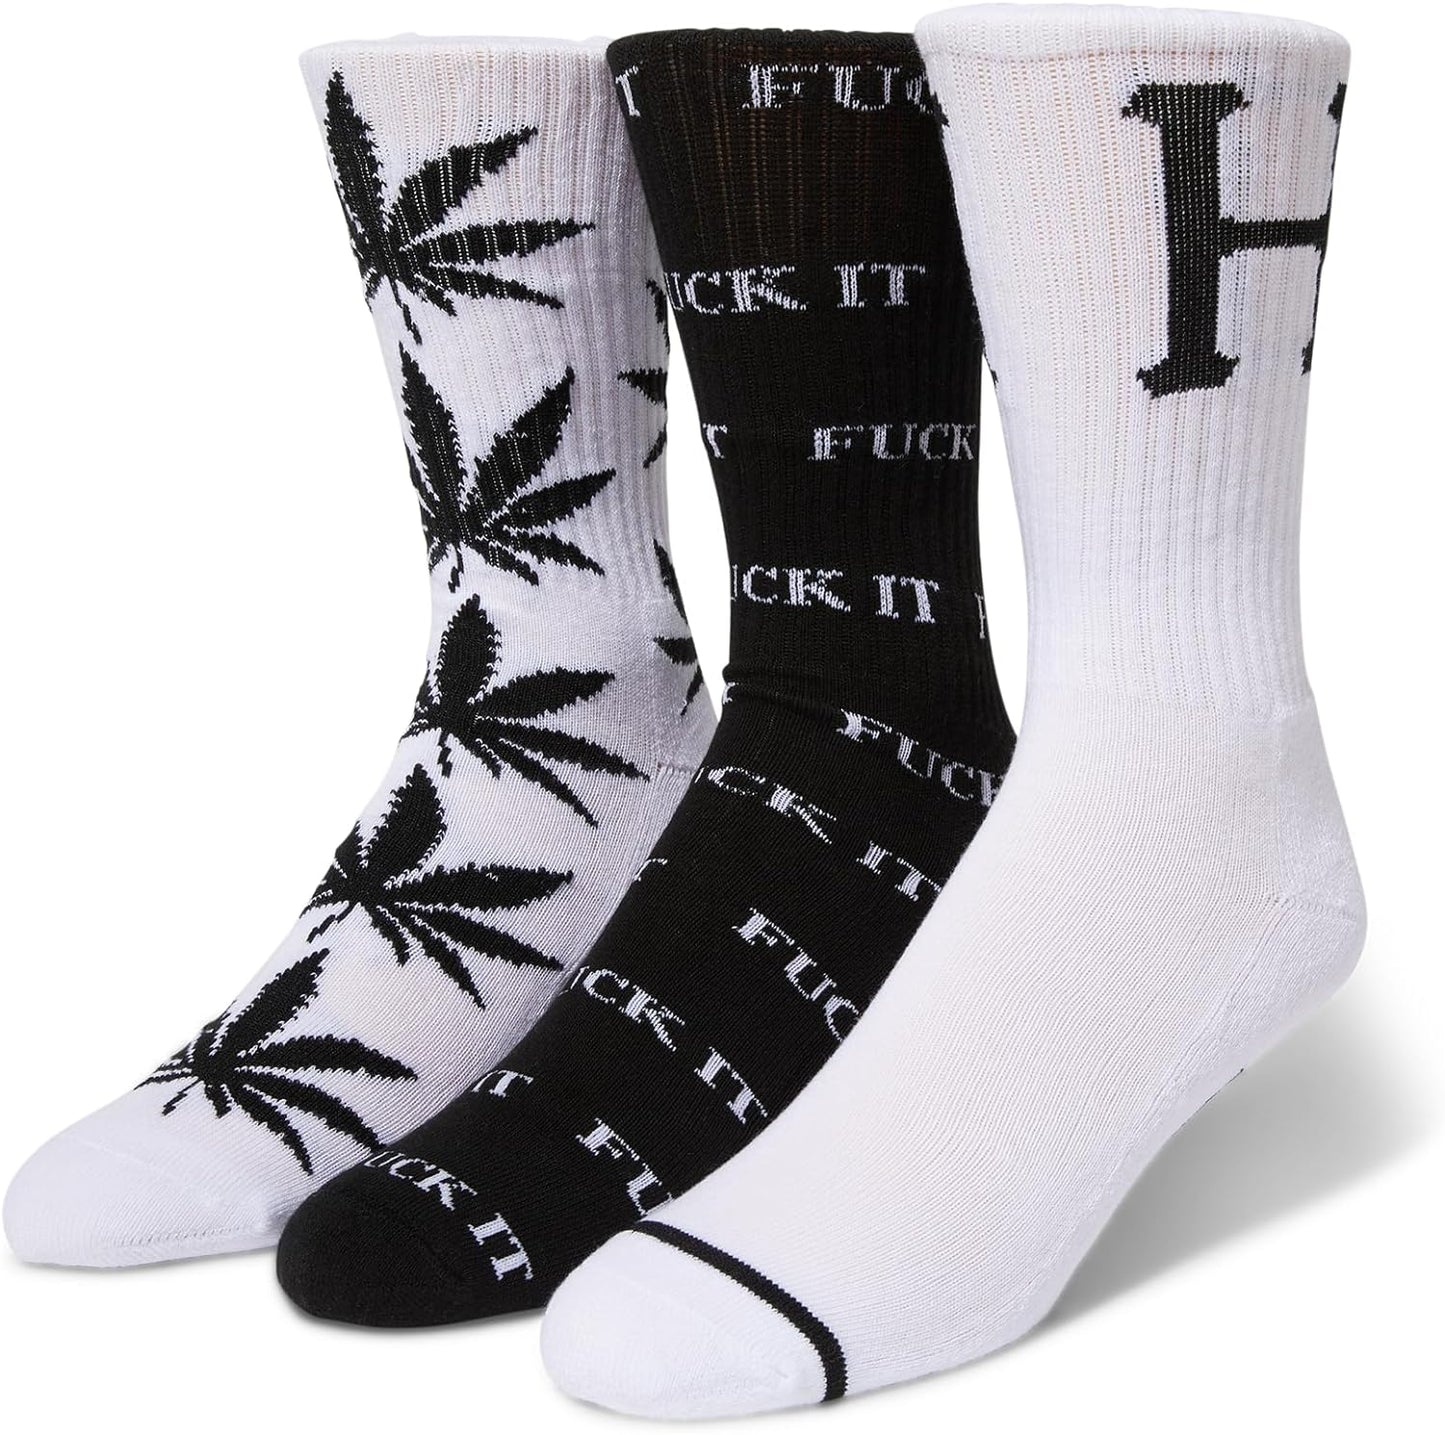 HUF - Huf Variety 3 Pack Socks